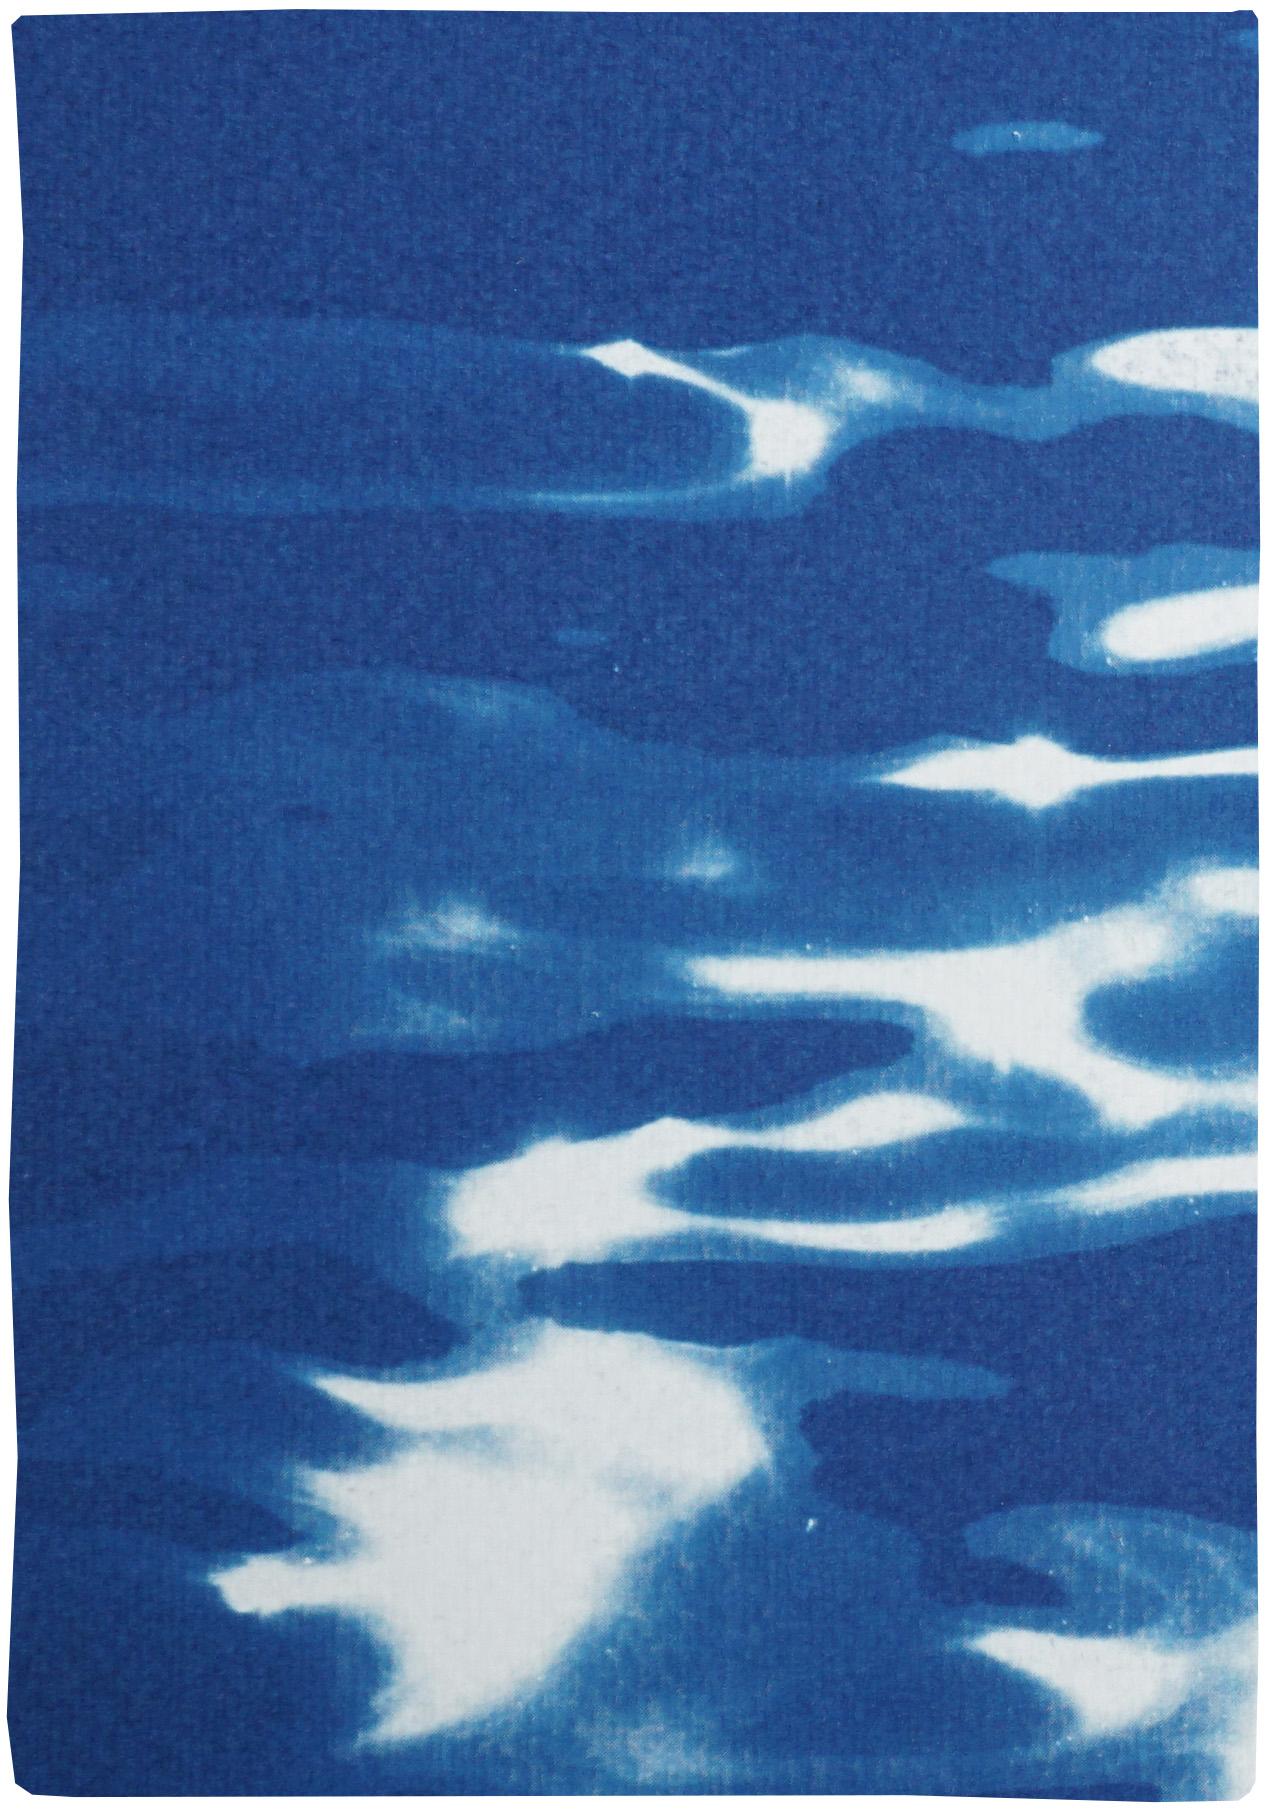 Lido Island Reflections, Venice Landscape Blue Tones, Minimal Cyanotype Print  1